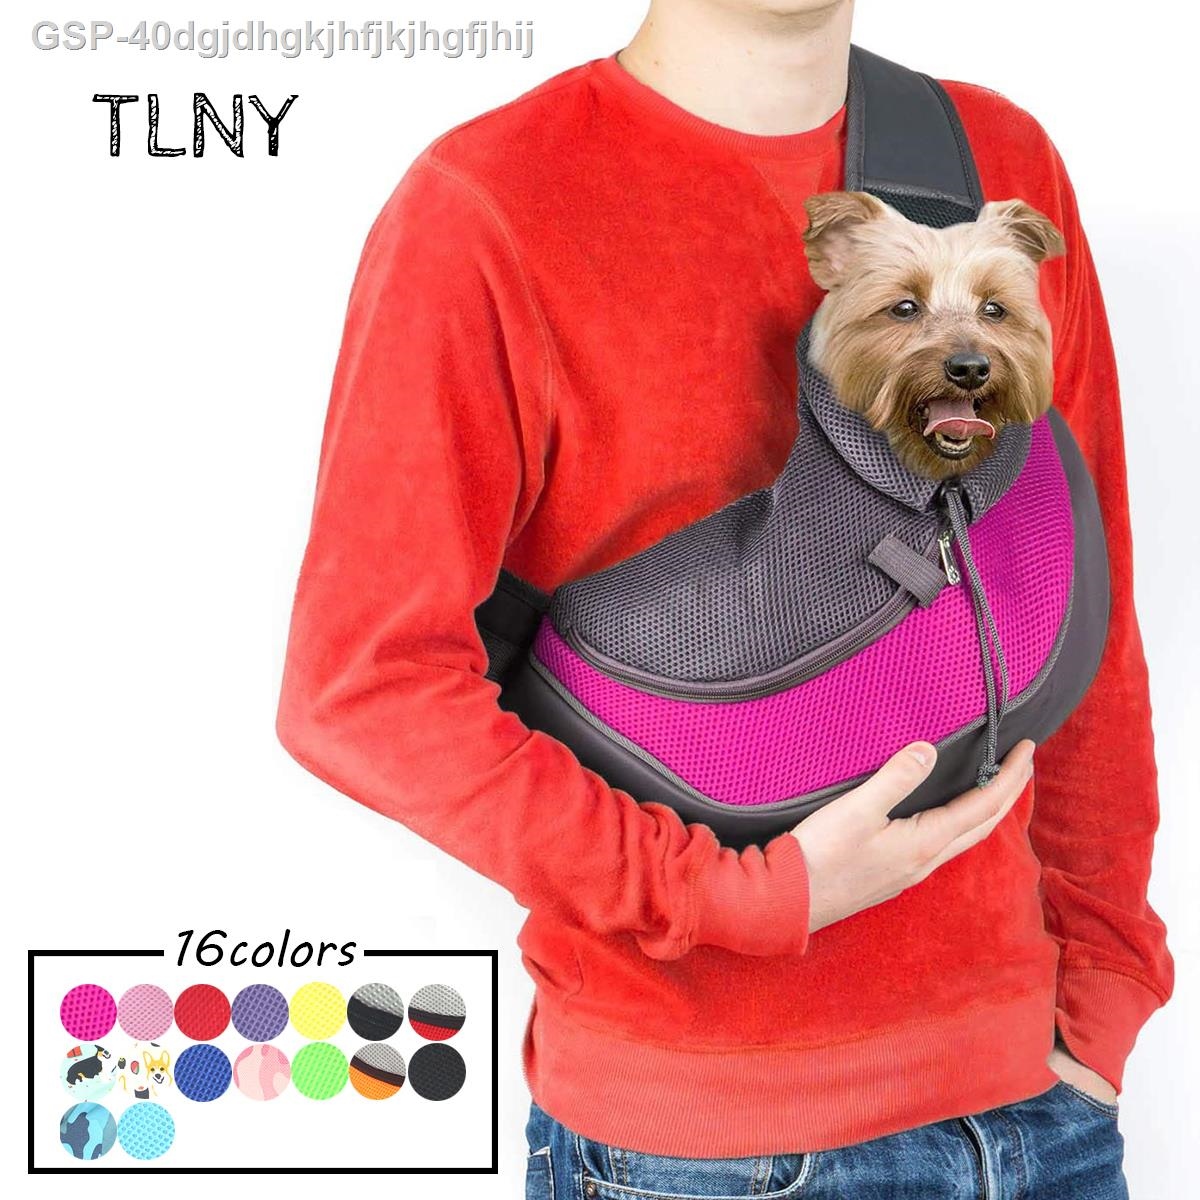 40dgjdhgkjhfjkjhgfjhij TNLY Breathable Slings Dog Outdoor Handbag Shoulder